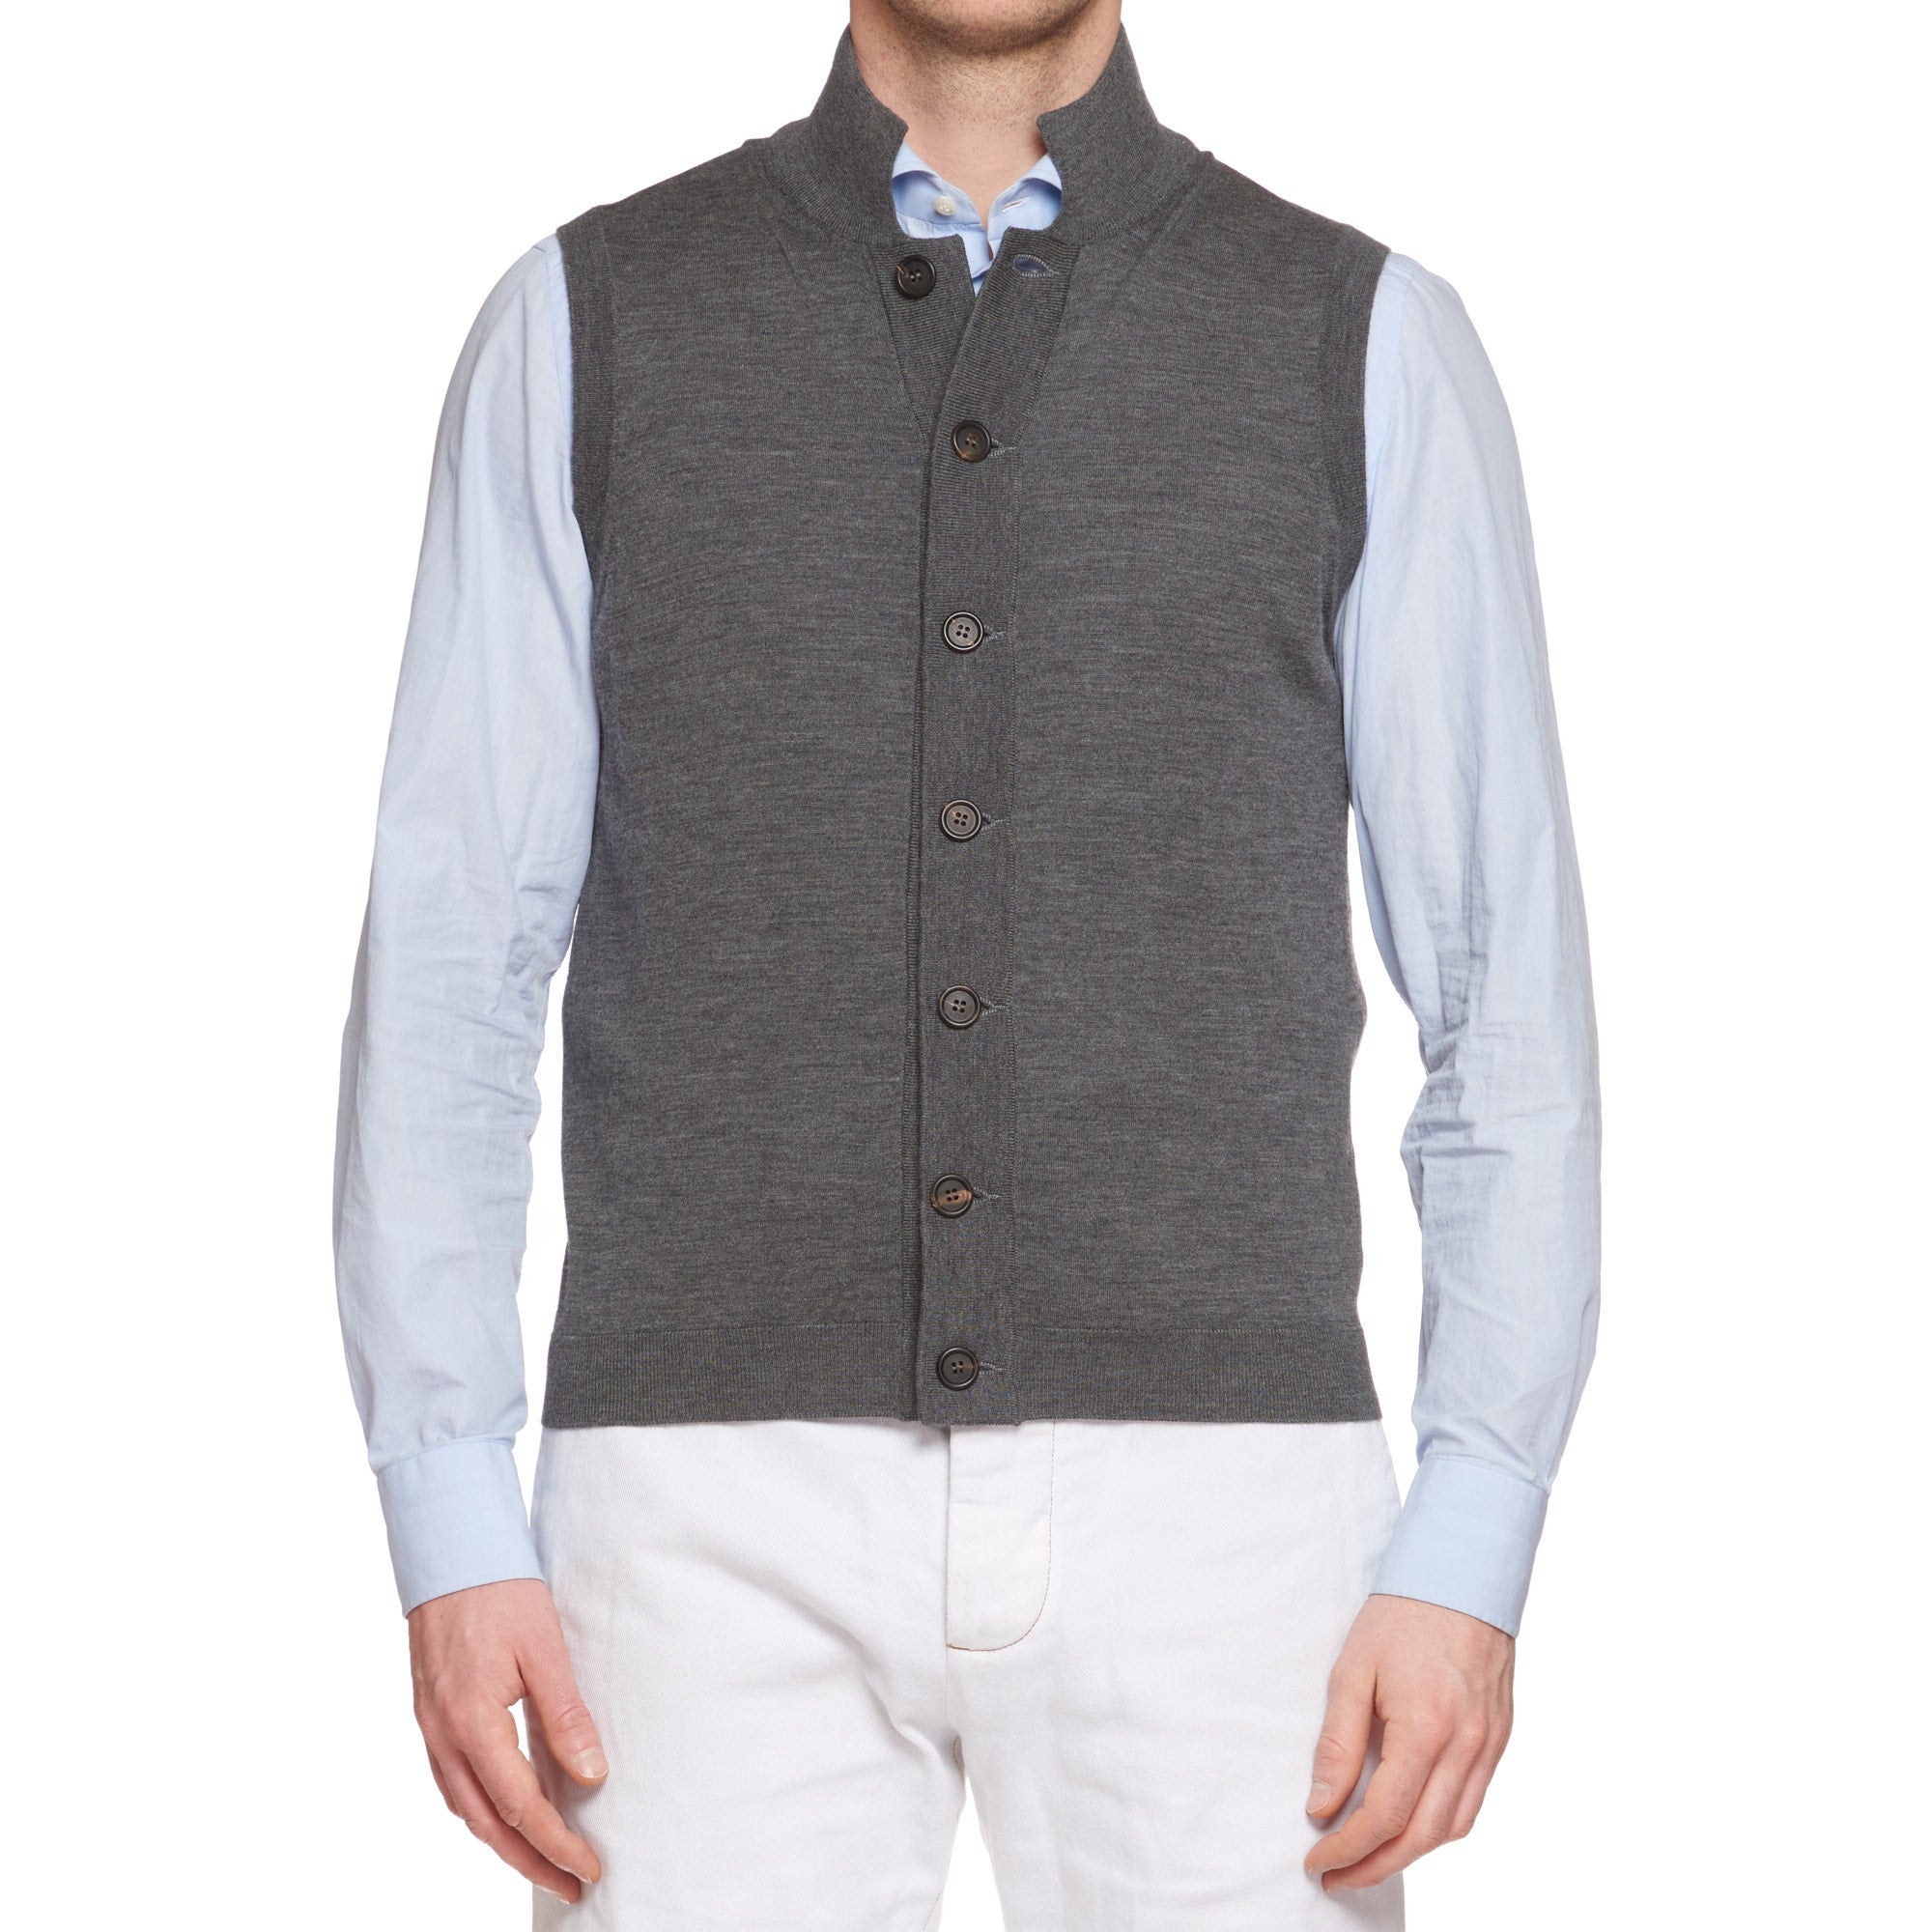 BRUNELLO CUCINELLI Gray Wool-Cashmere Sleeveless Cardigan Sweater Vest 50 US M BRUNELLO CUCINELLI